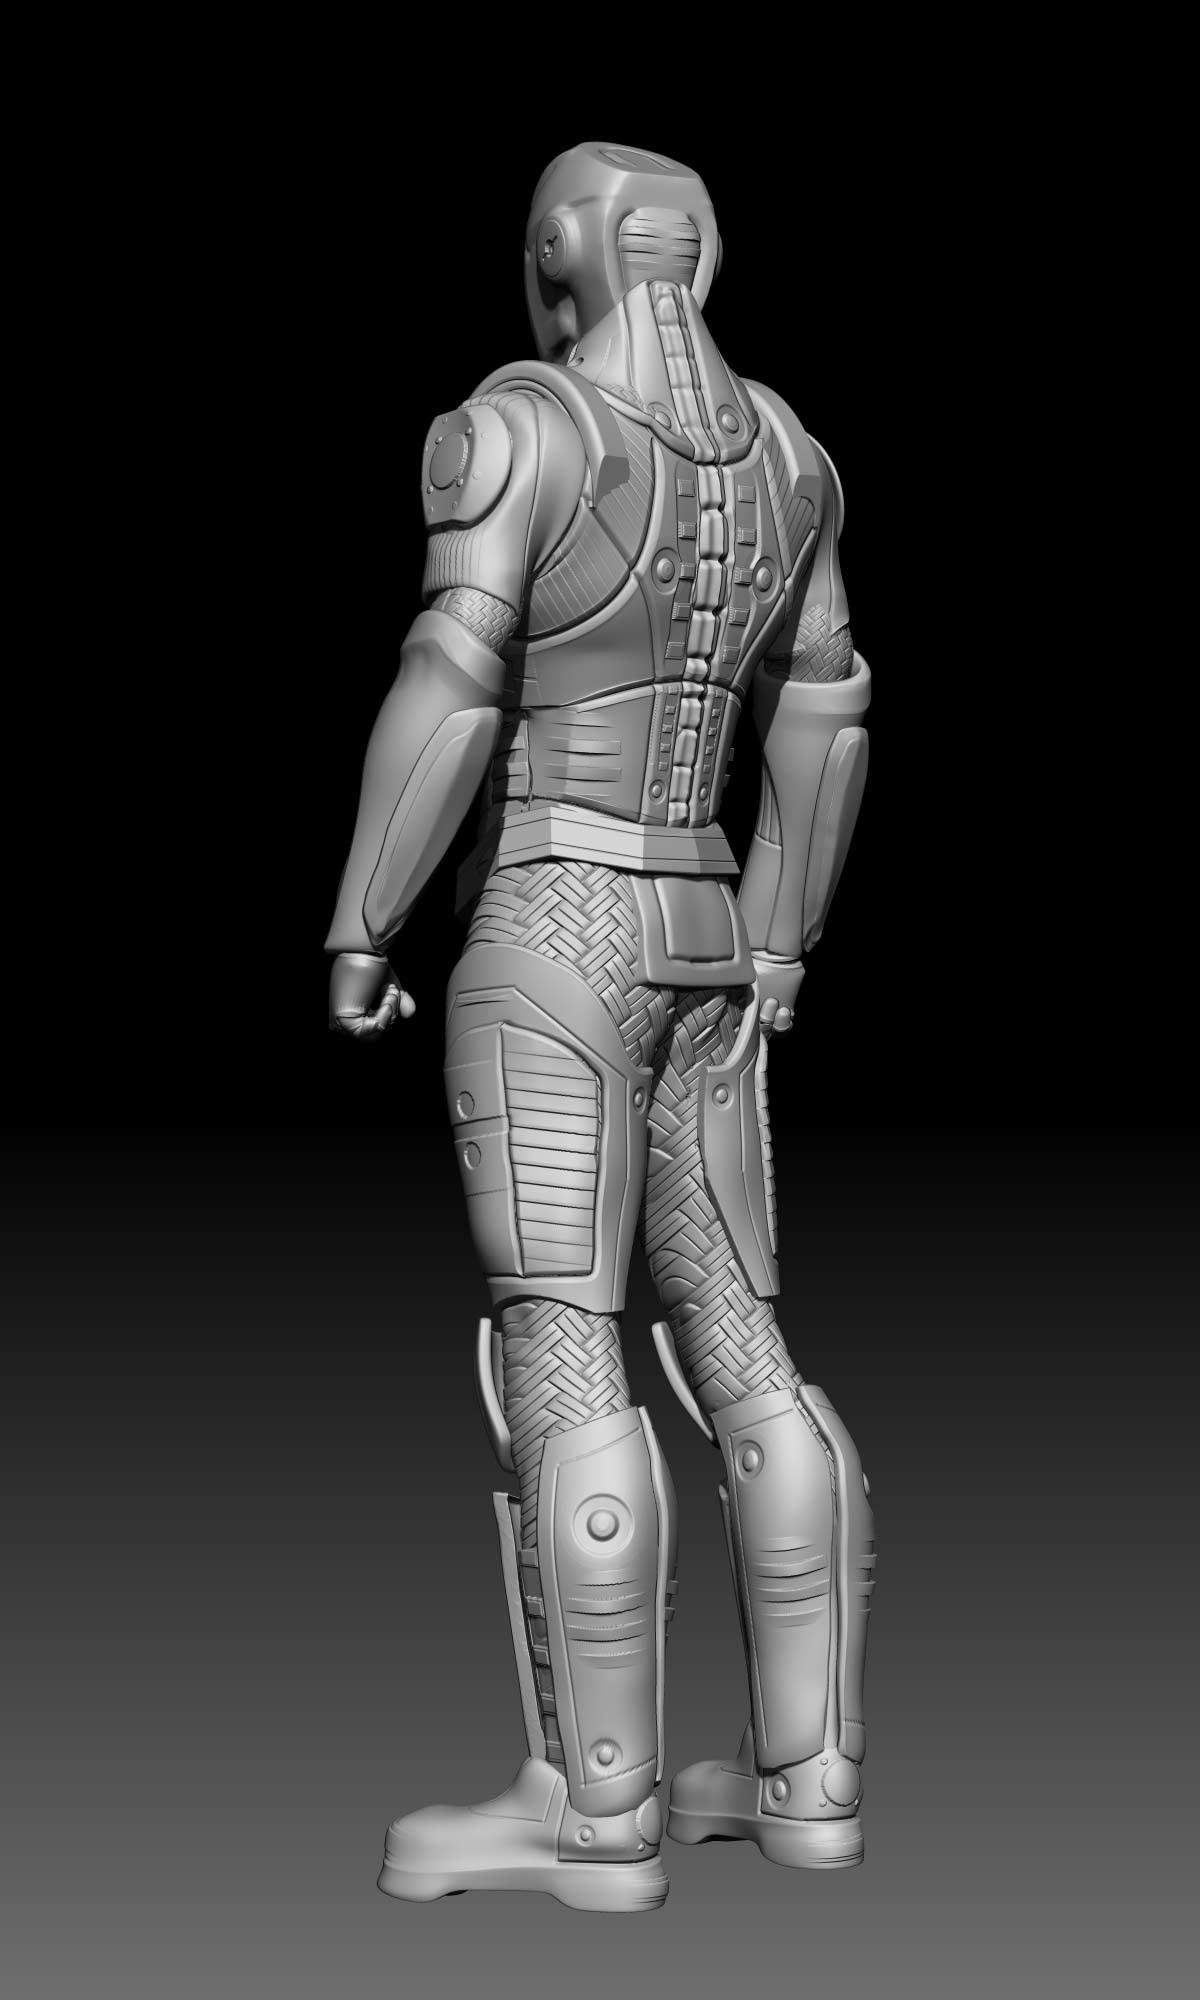 cyberg Aram Vardazaryan Character robbot desigm sculpt 3D movie concept SuperHero marvel iron man